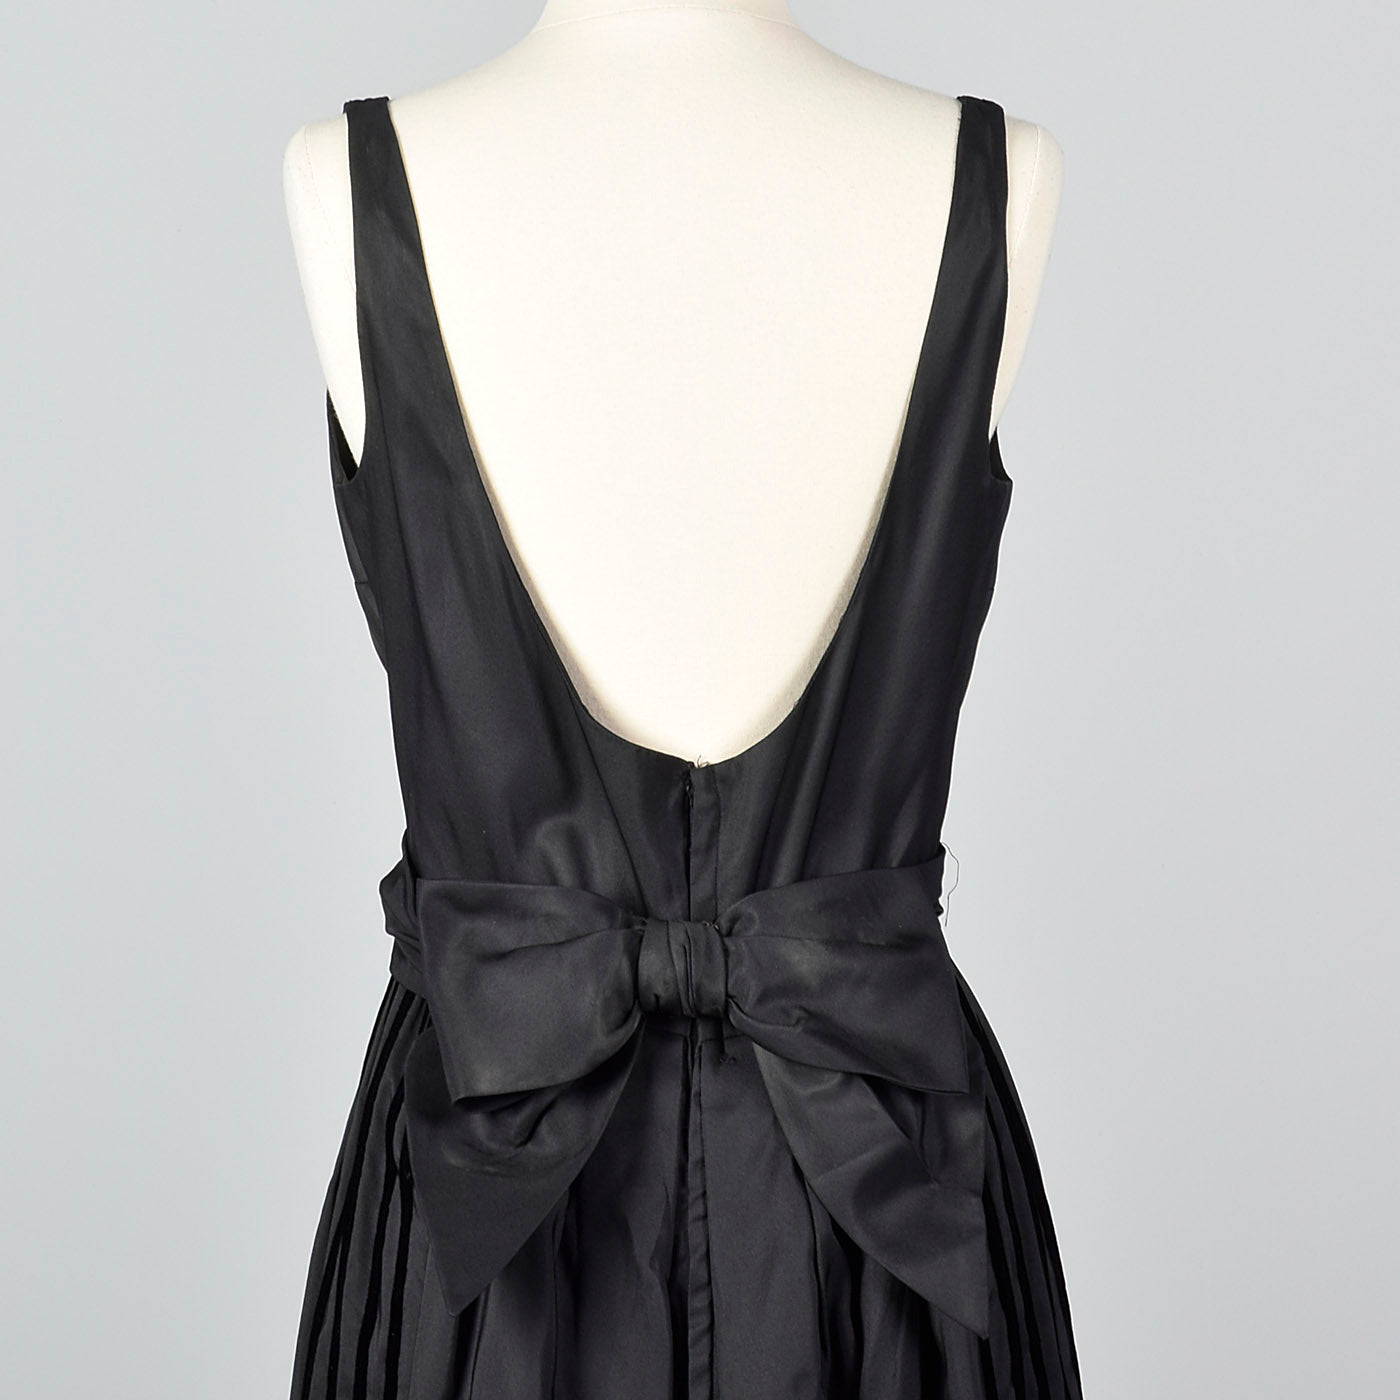 1950s Formal Black Maxi Dress with Stripe Trim